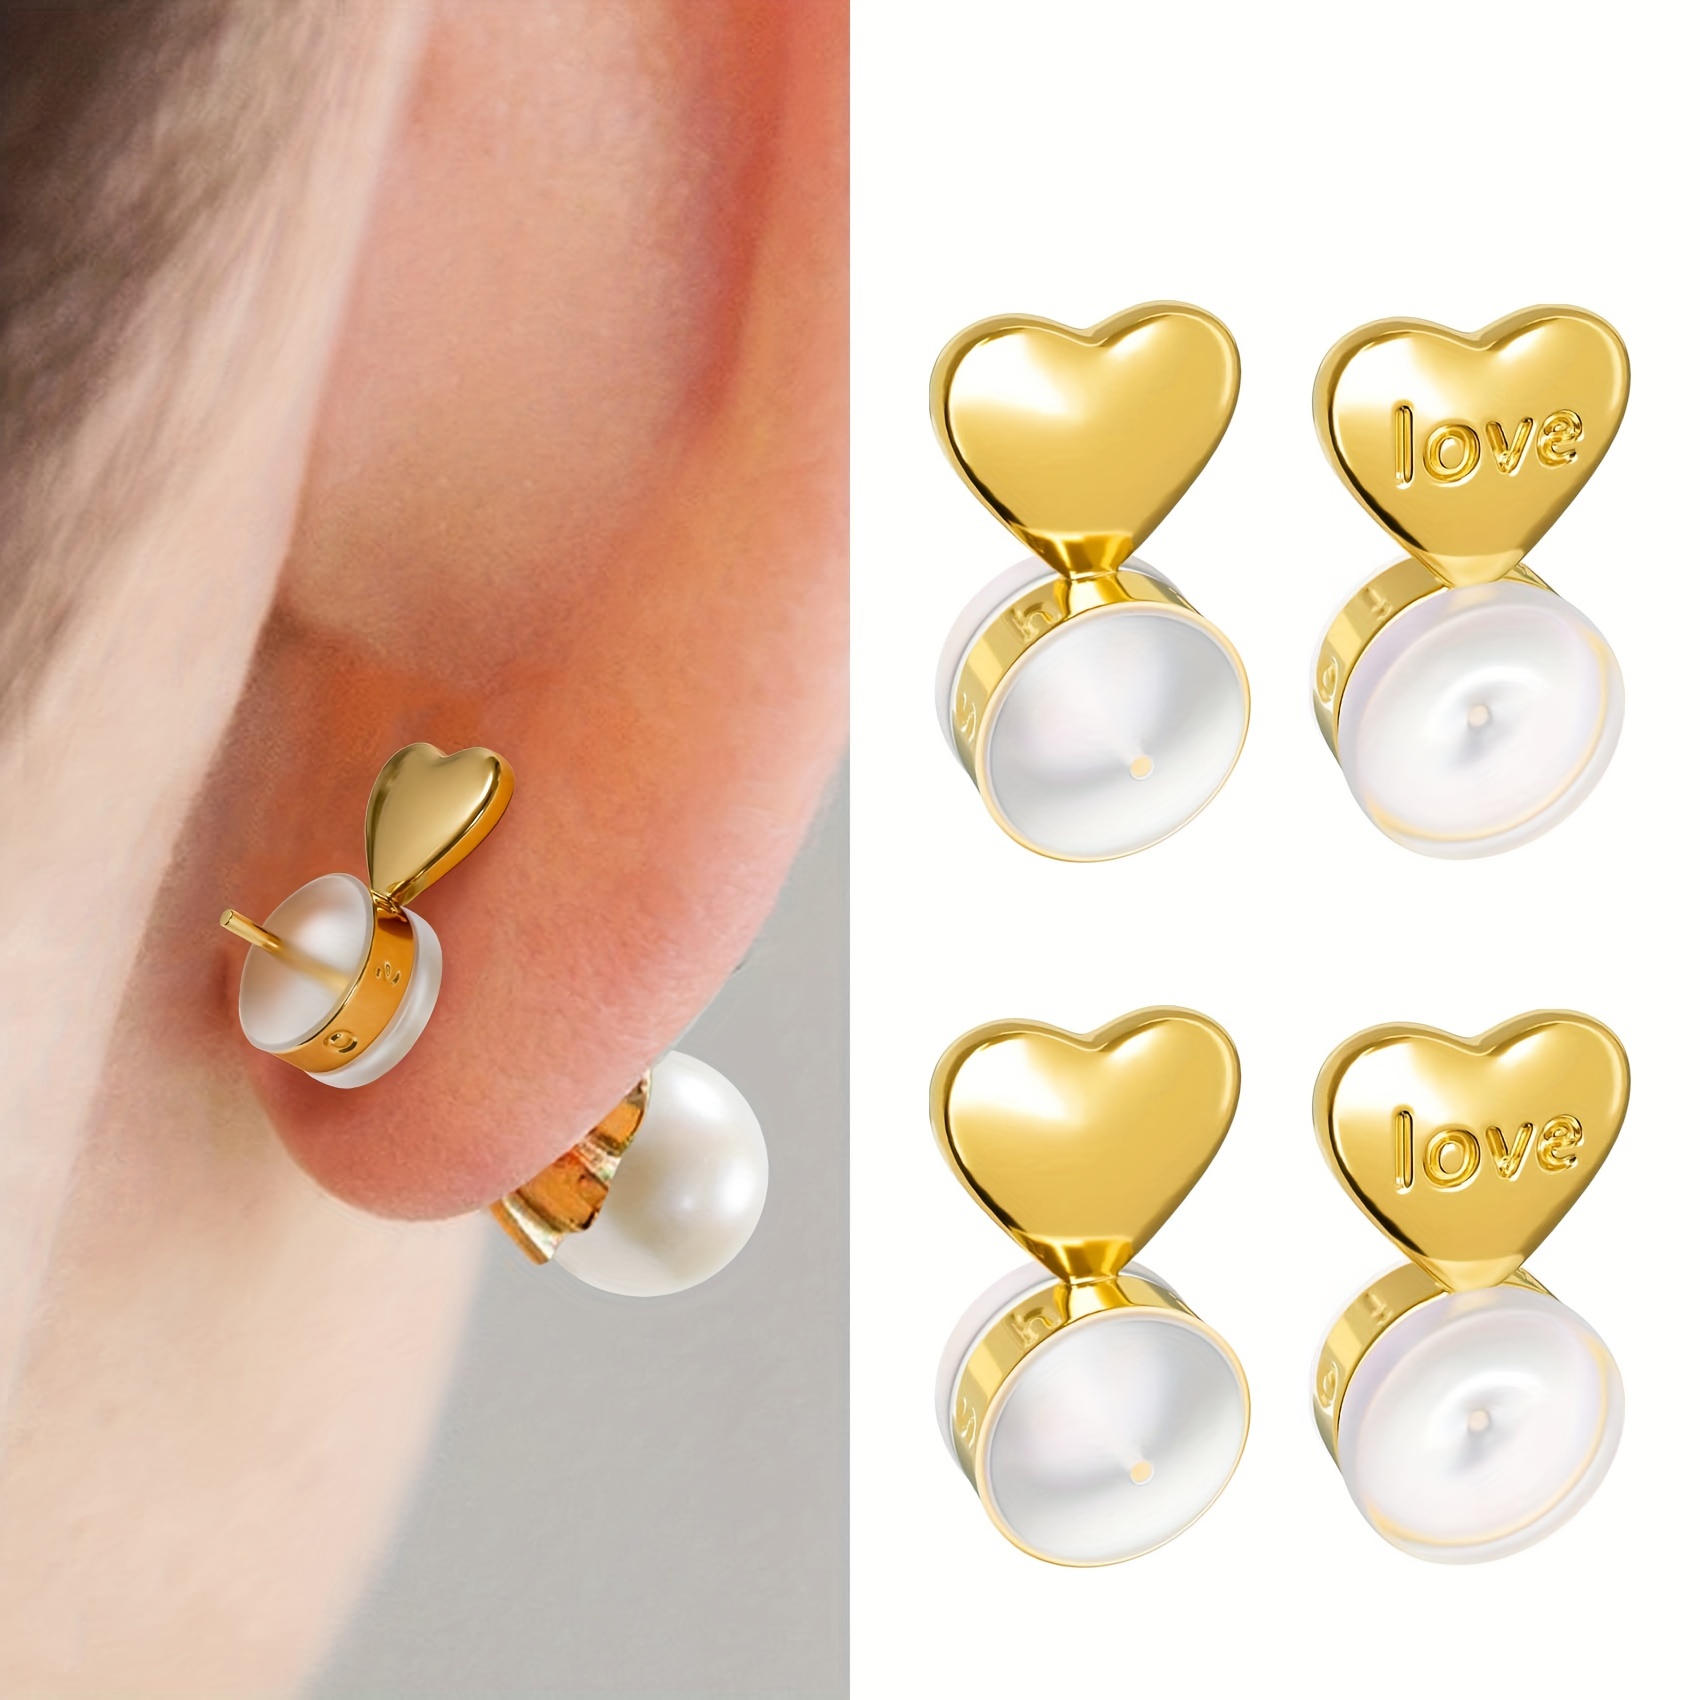 Backs For Droopy Ears, Adjustable Heart Large Earring Backs For